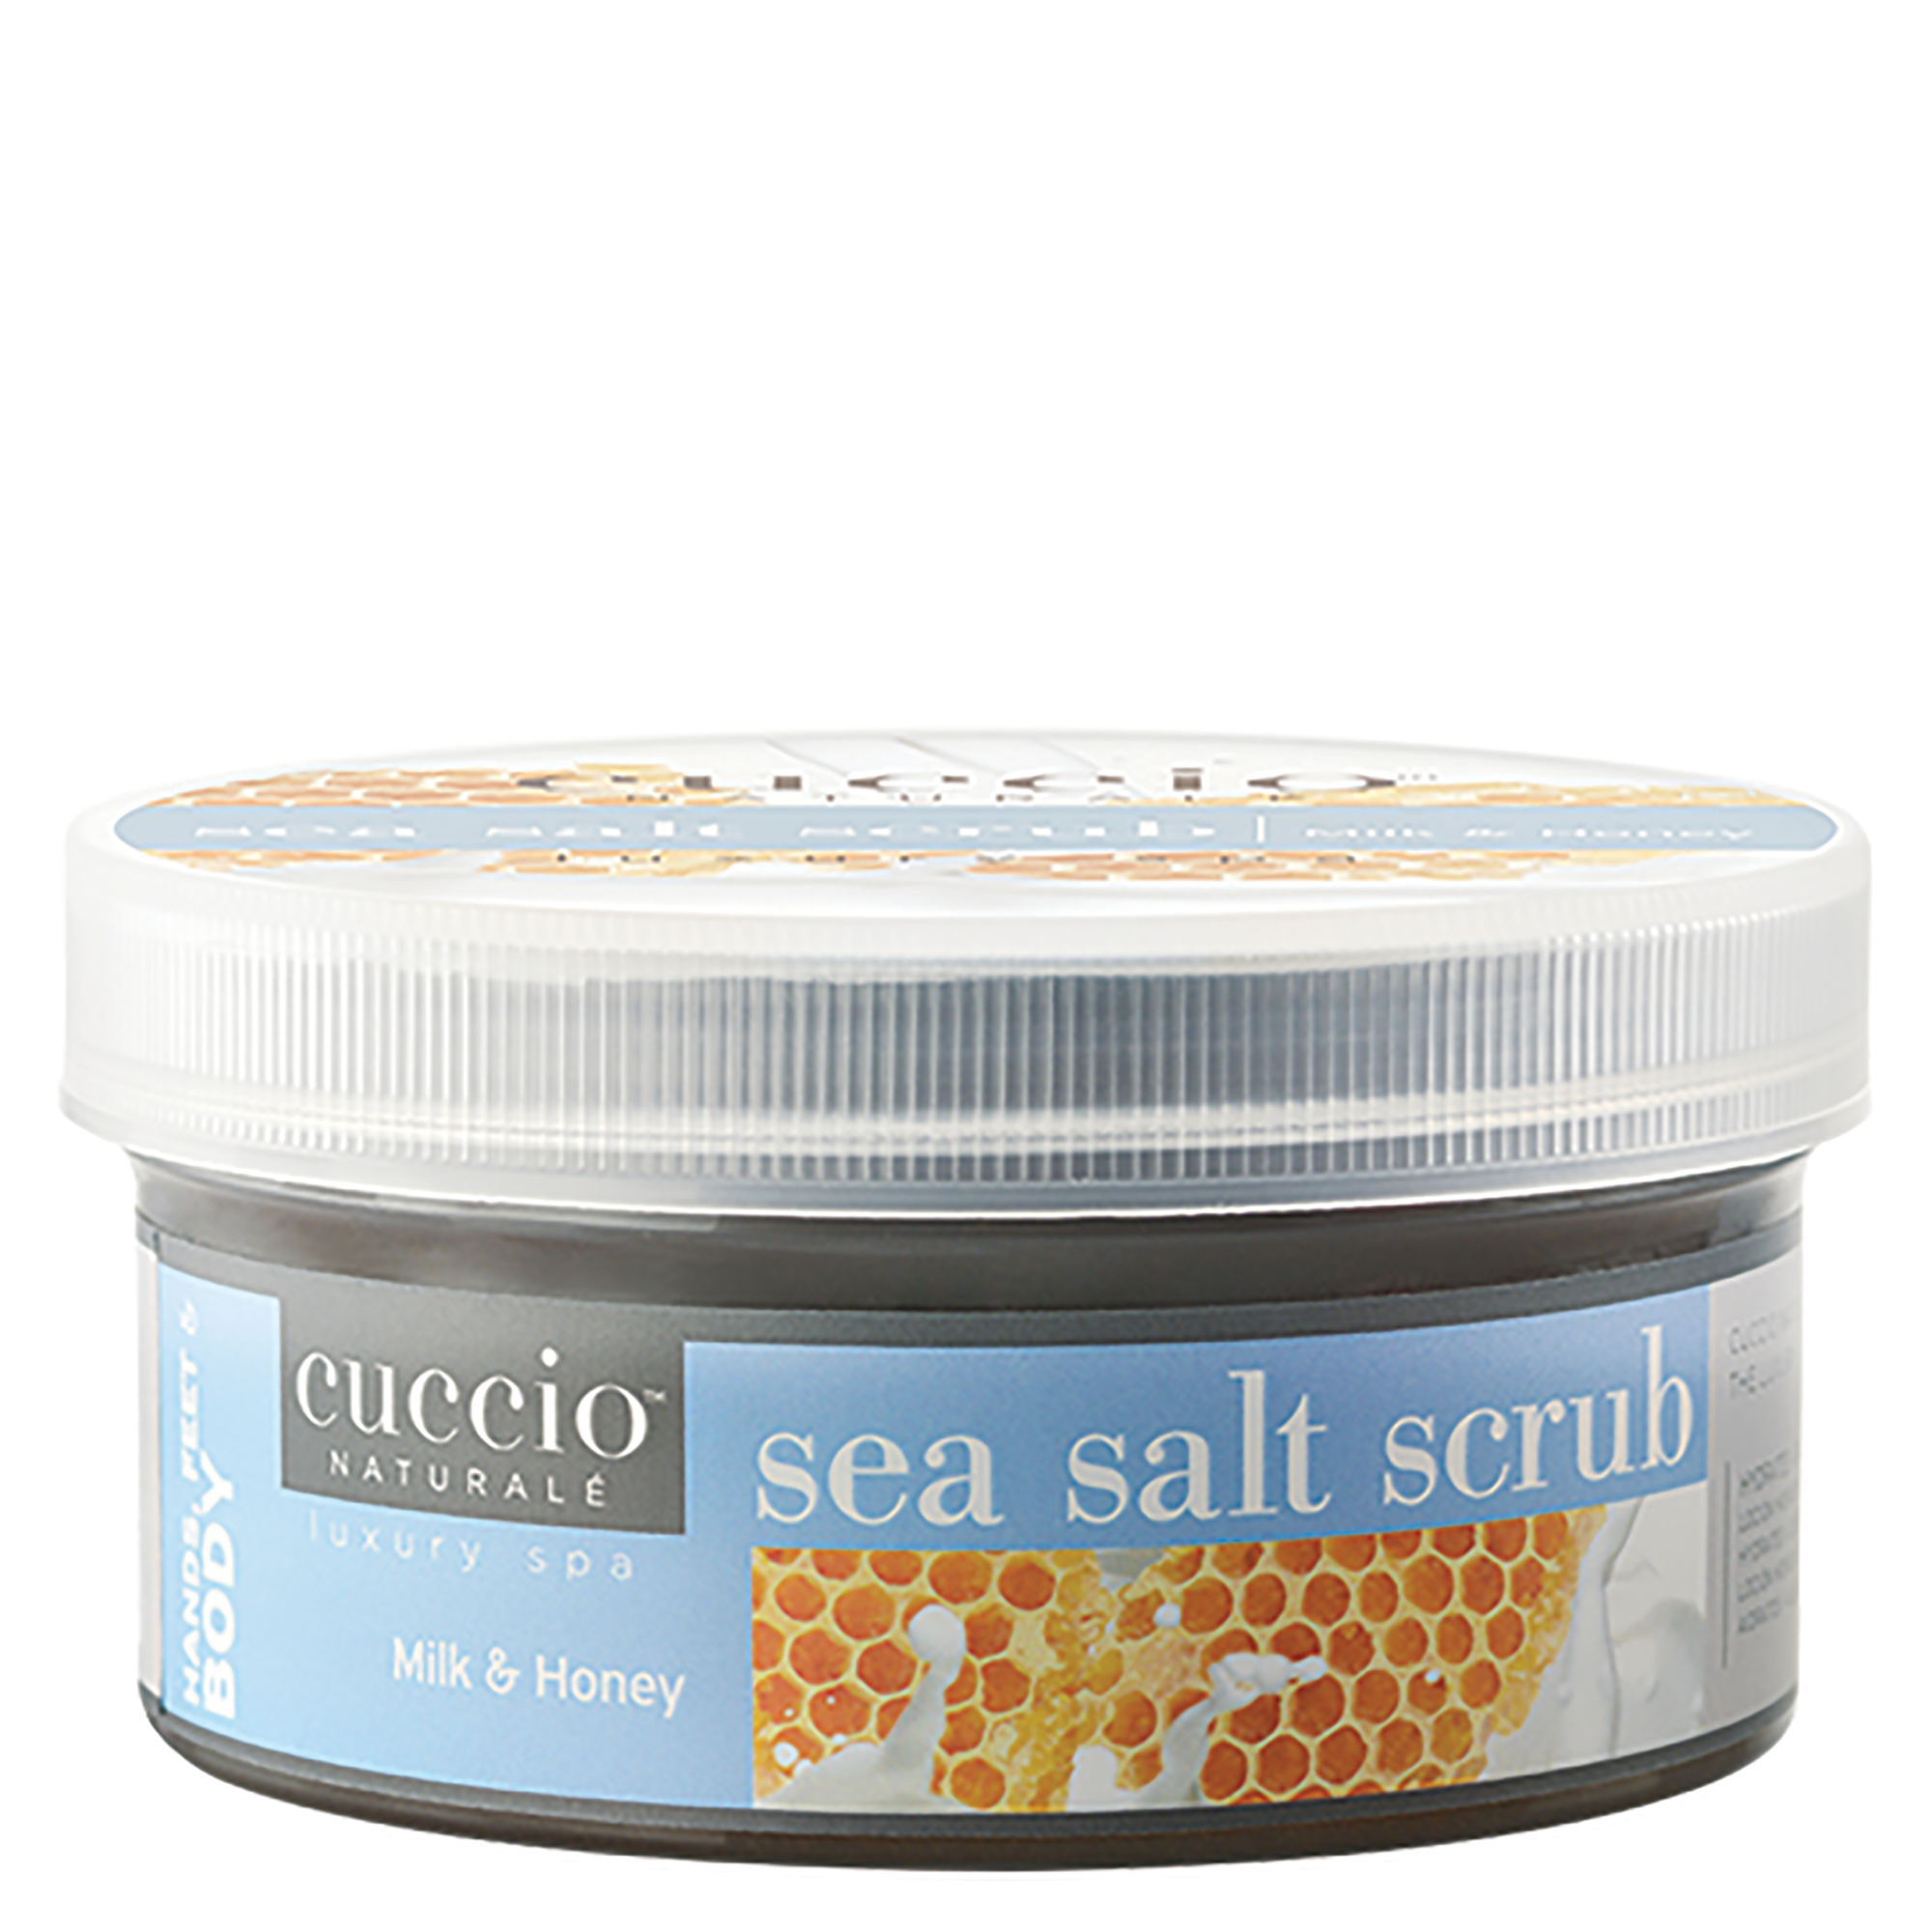 Sea Salt Scrub - Milk  Honey - 19.5 oz.